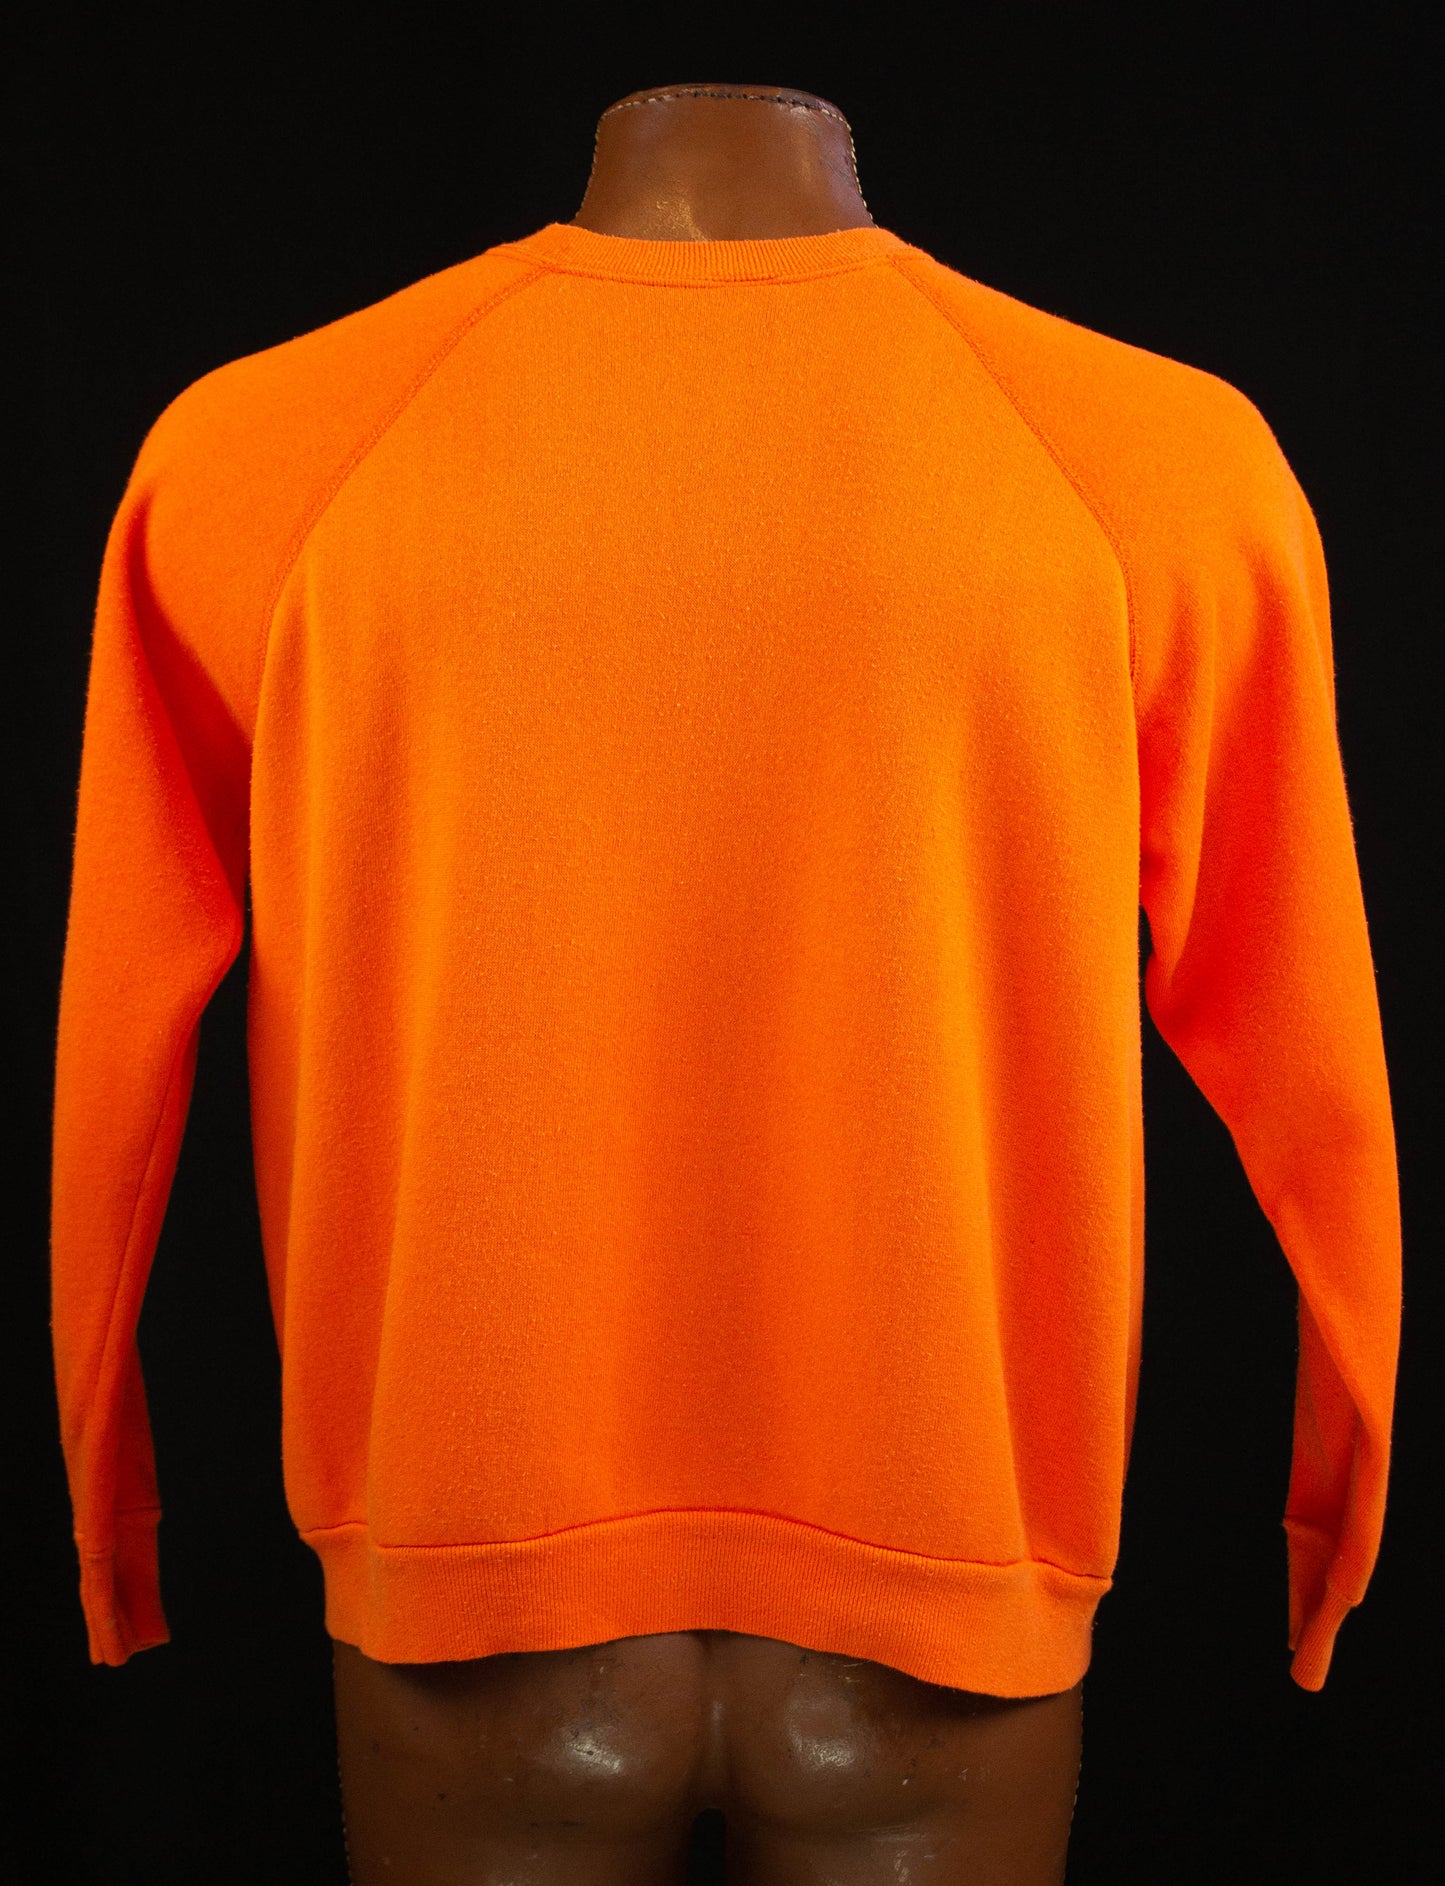 Vintage Syracuse University Raglan Crewneck Sweatshirt 70s Velva Sheen Orange and Navy Blue Large